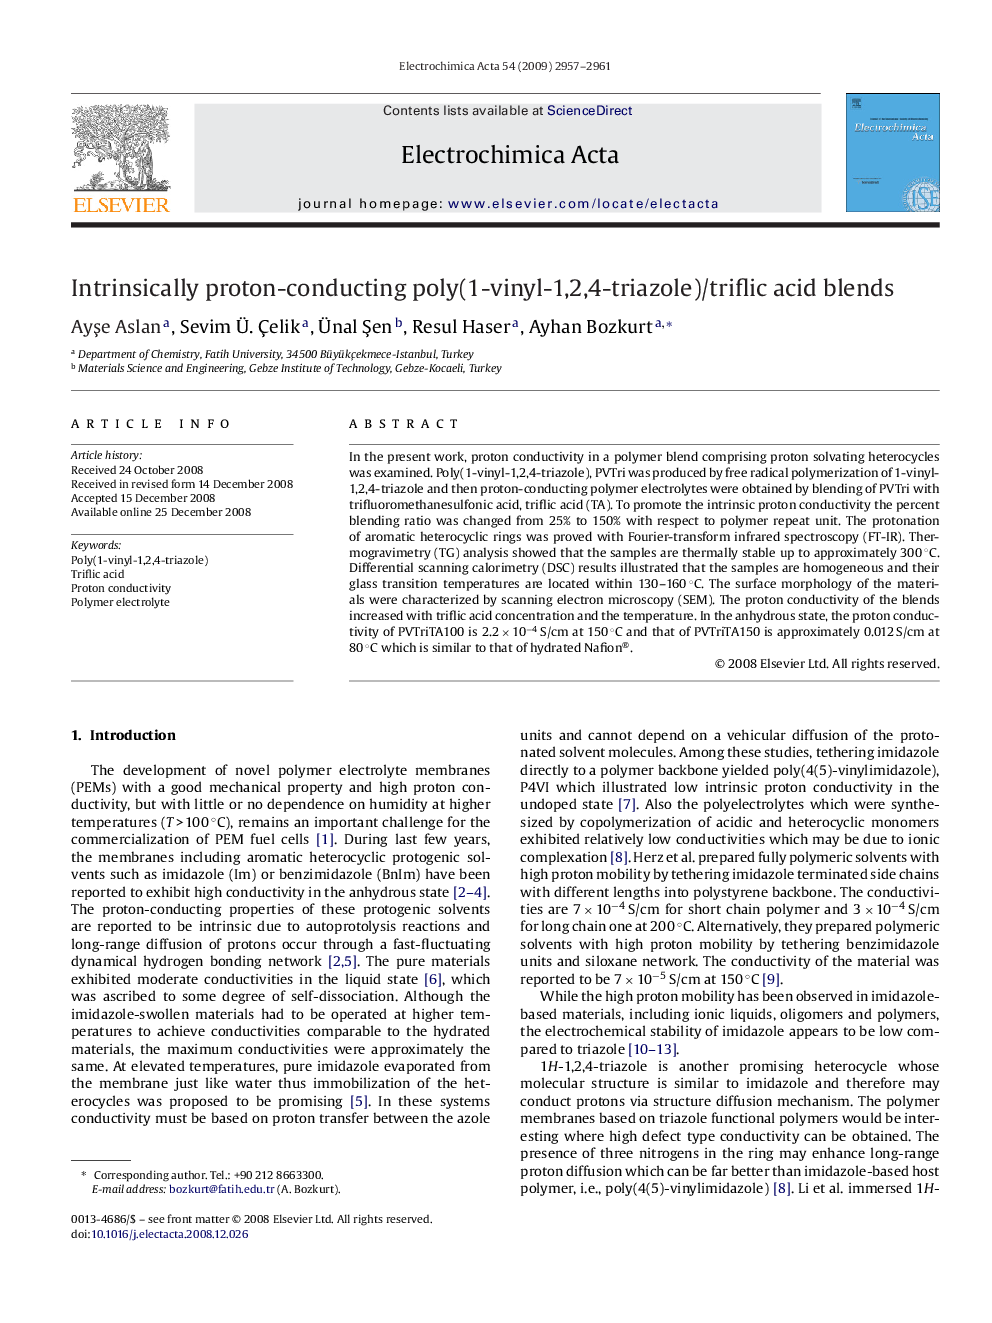 Intrinsically proton-conducting poly(1-vinyl-1,2,4-triazole)/triflic acid blends